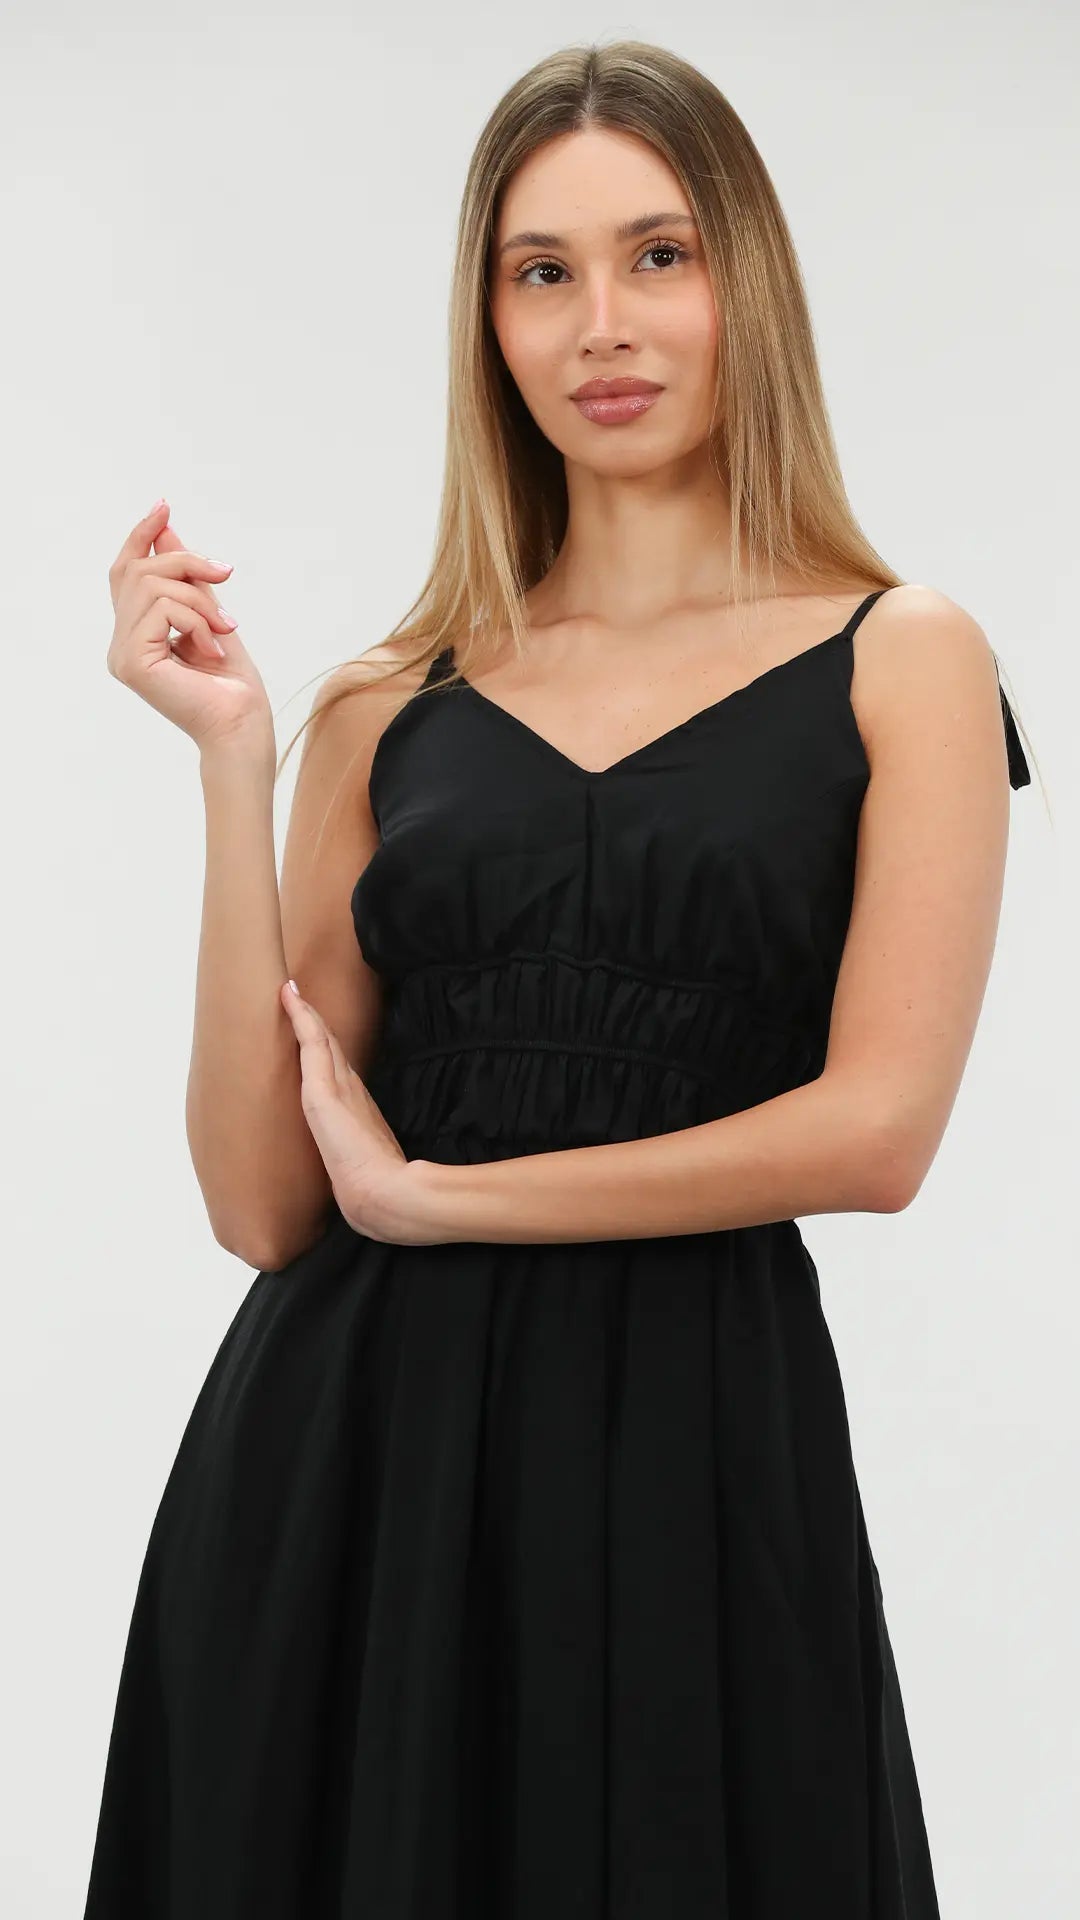 Long Dress Black With Shoulder-Ties